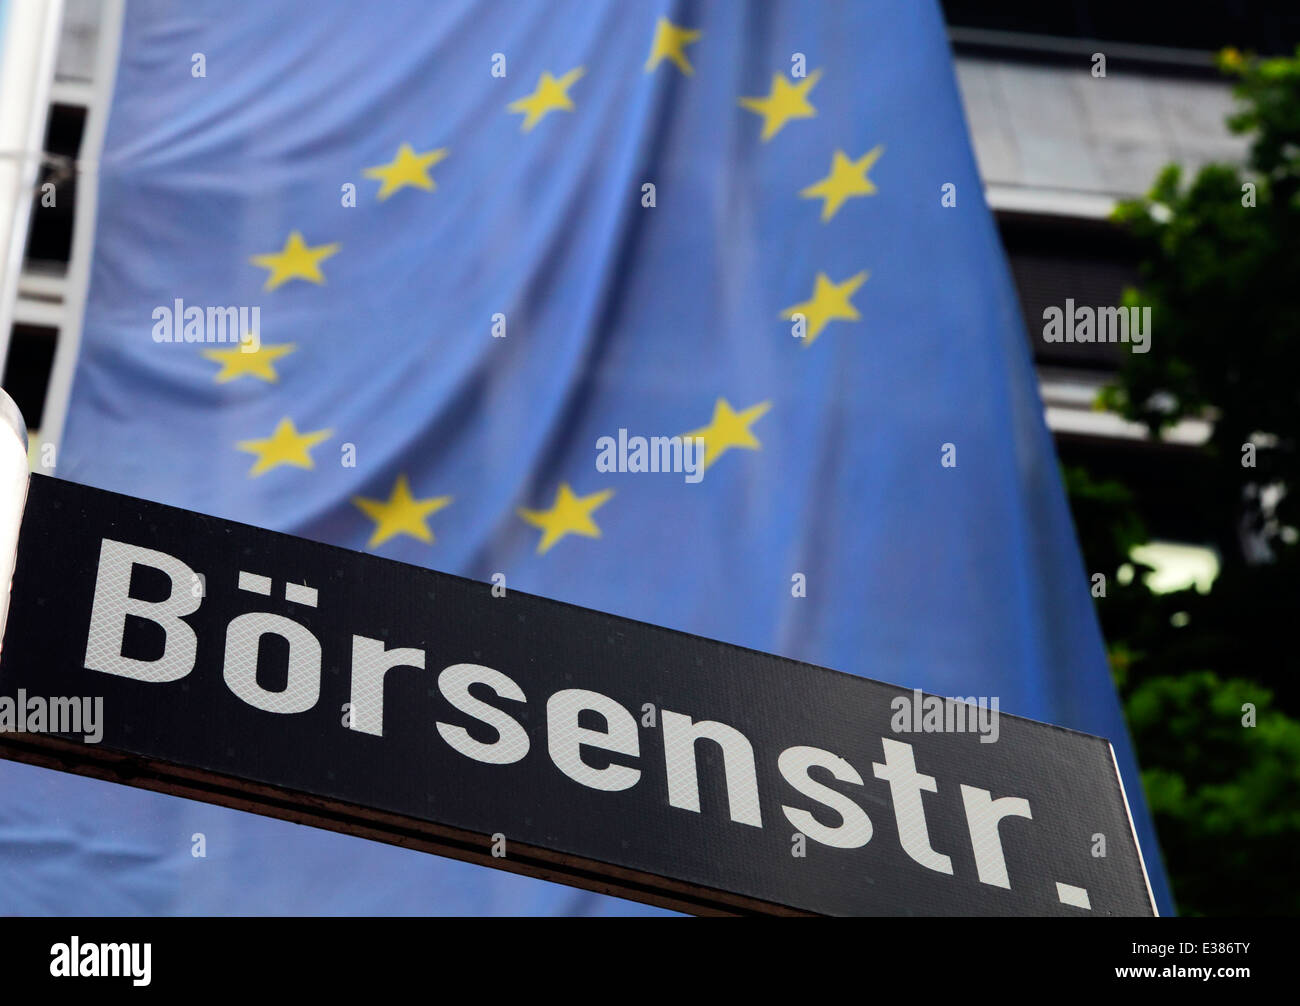 Börsenstr. sign (stock market street) in front of the European Union flag Stock Photo